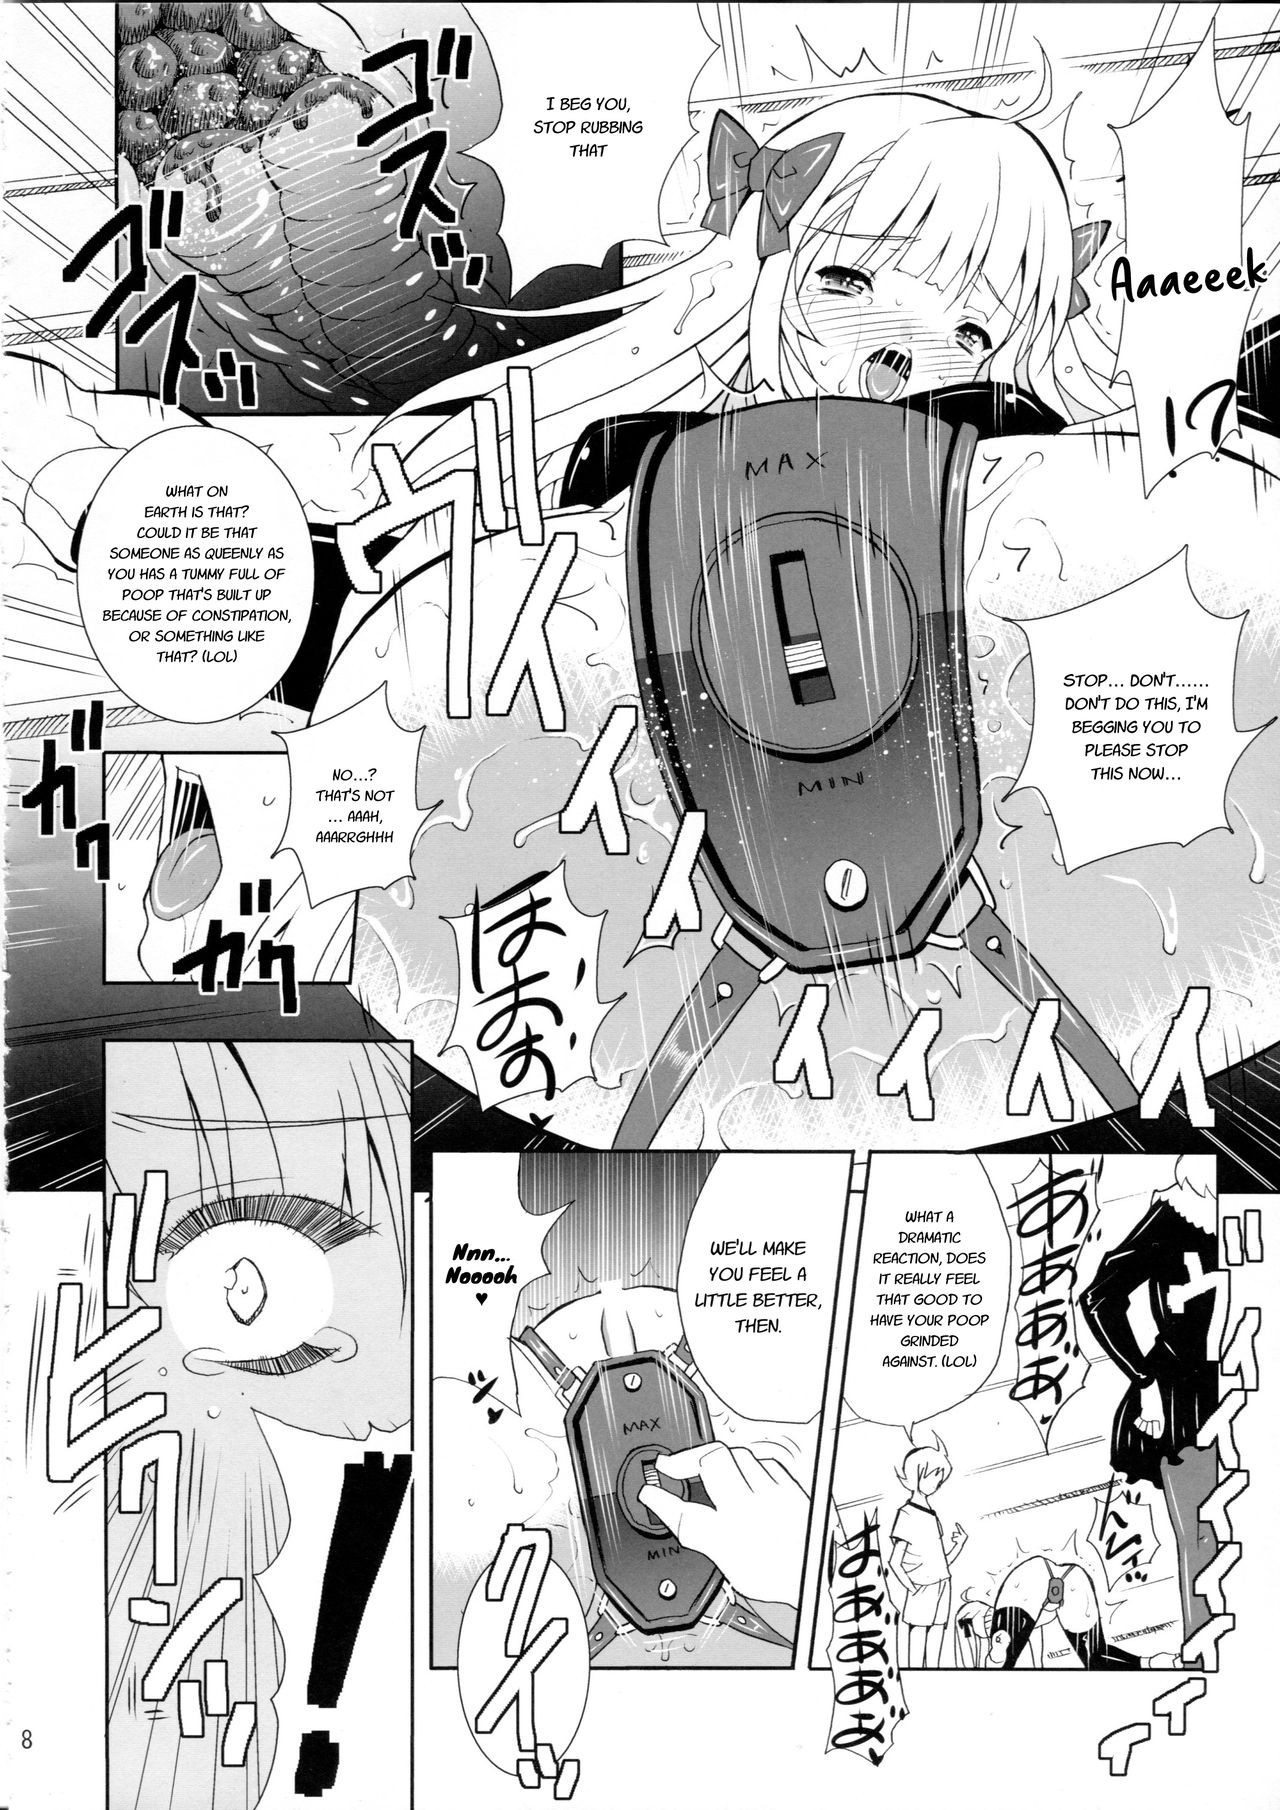 Punishment Hentai Manga | BDSM Fetish